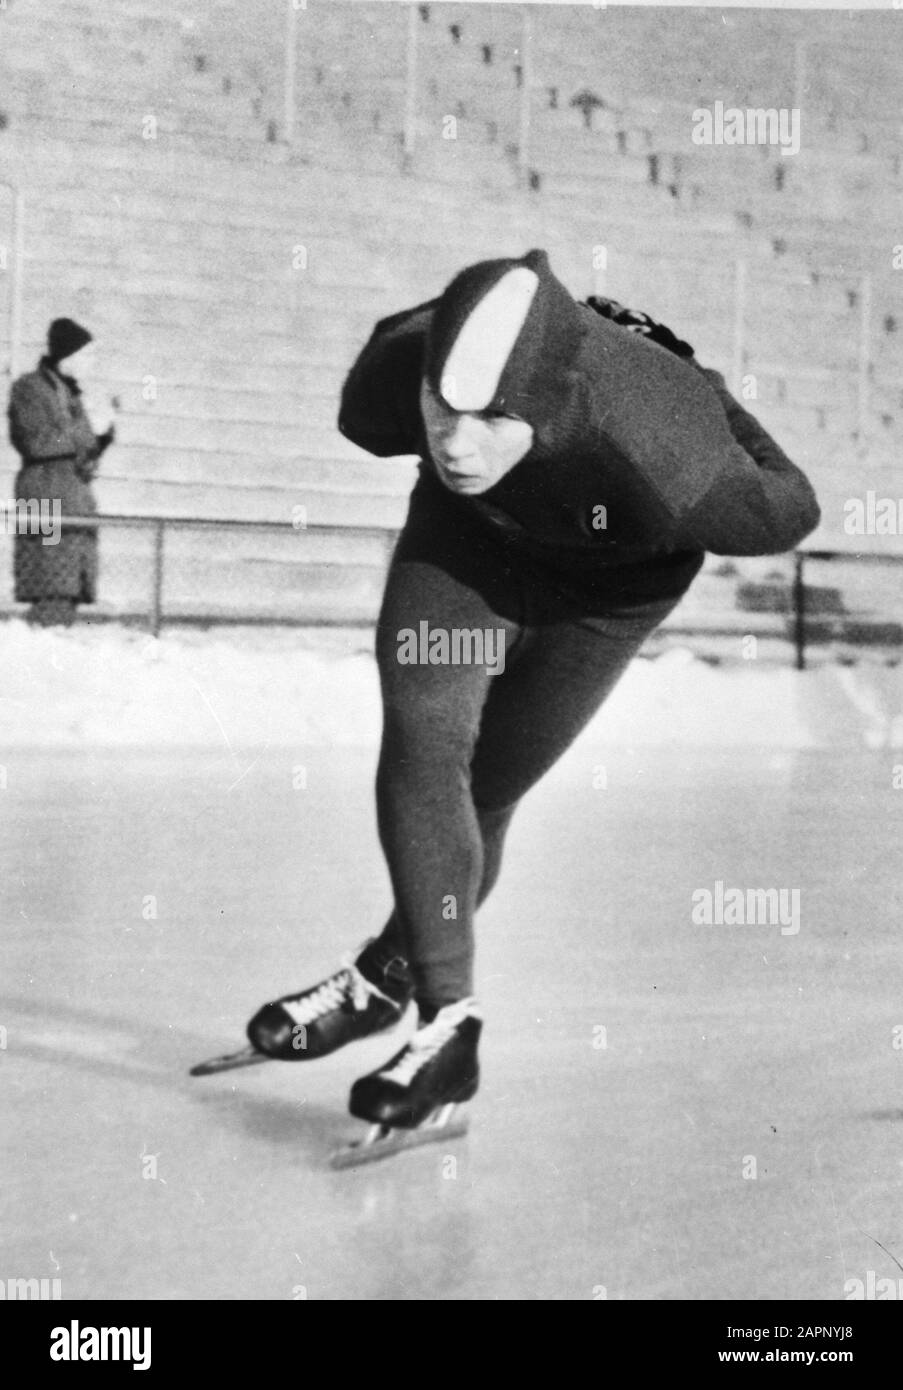 Russian skater in Shilikovsky Date: February 18, 1959 Stock Photo